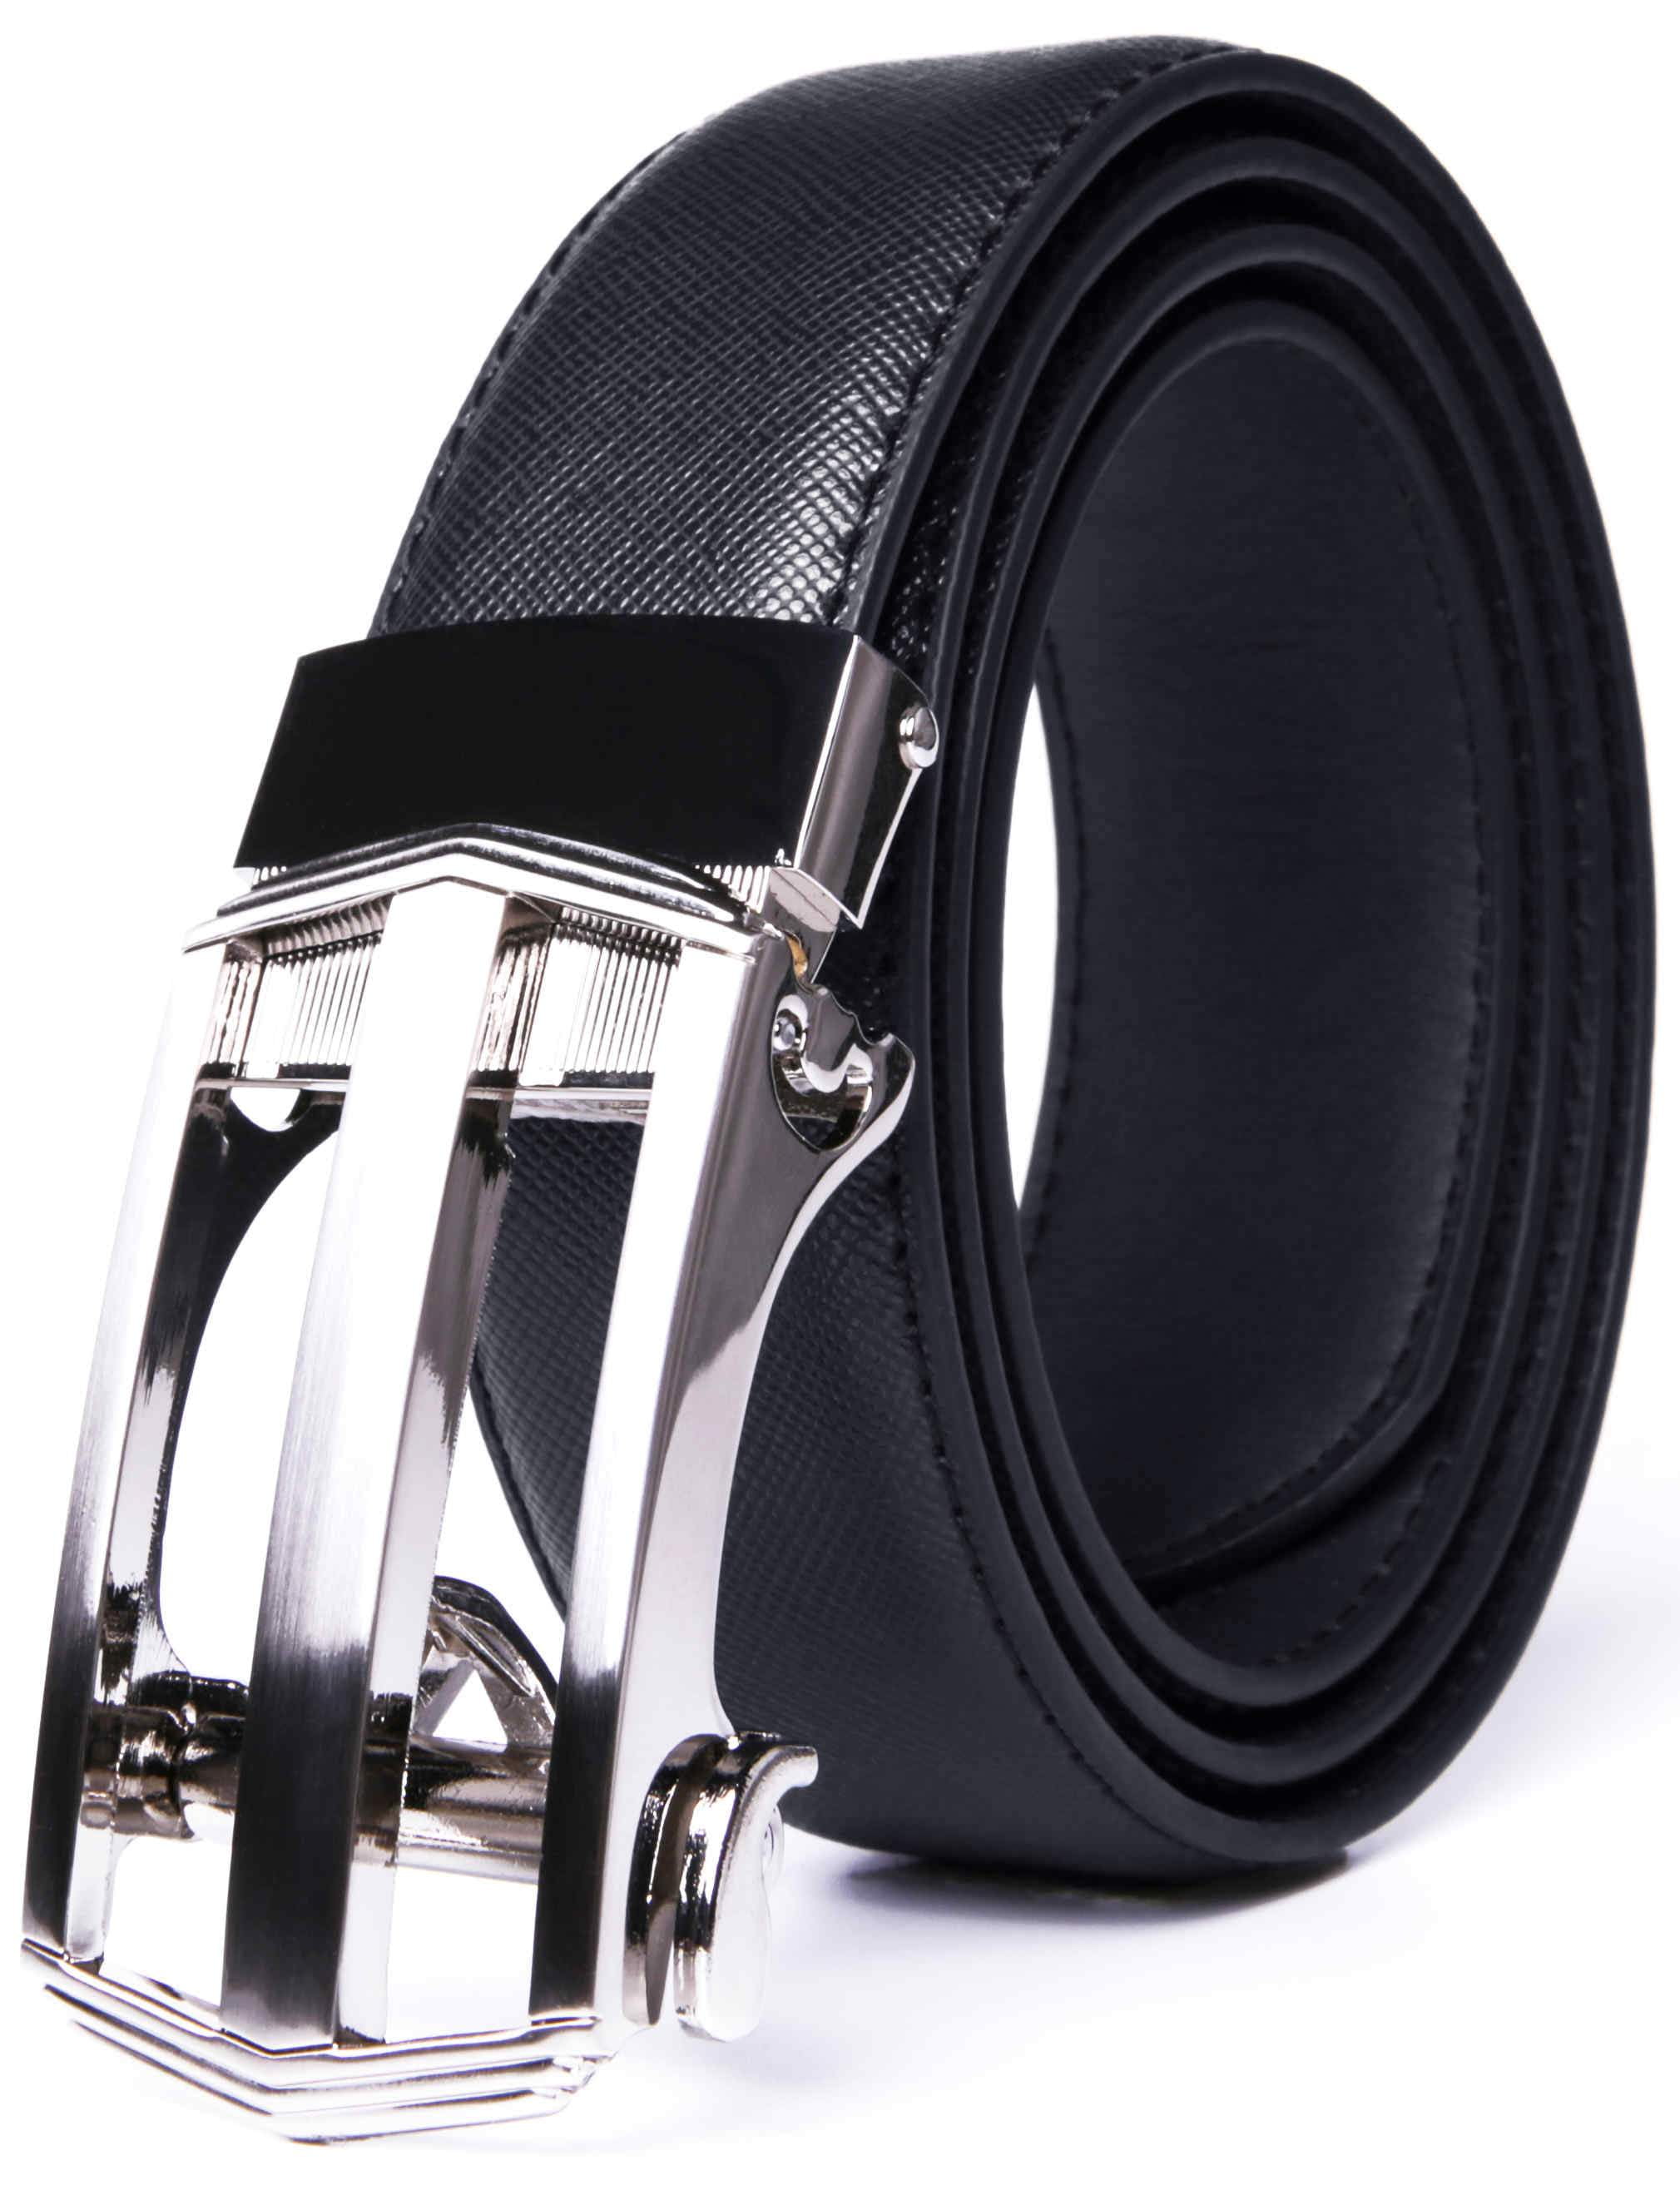 Access Denied - Mens Belt Leather Ratchet Belts For Men Casual & Dress ...